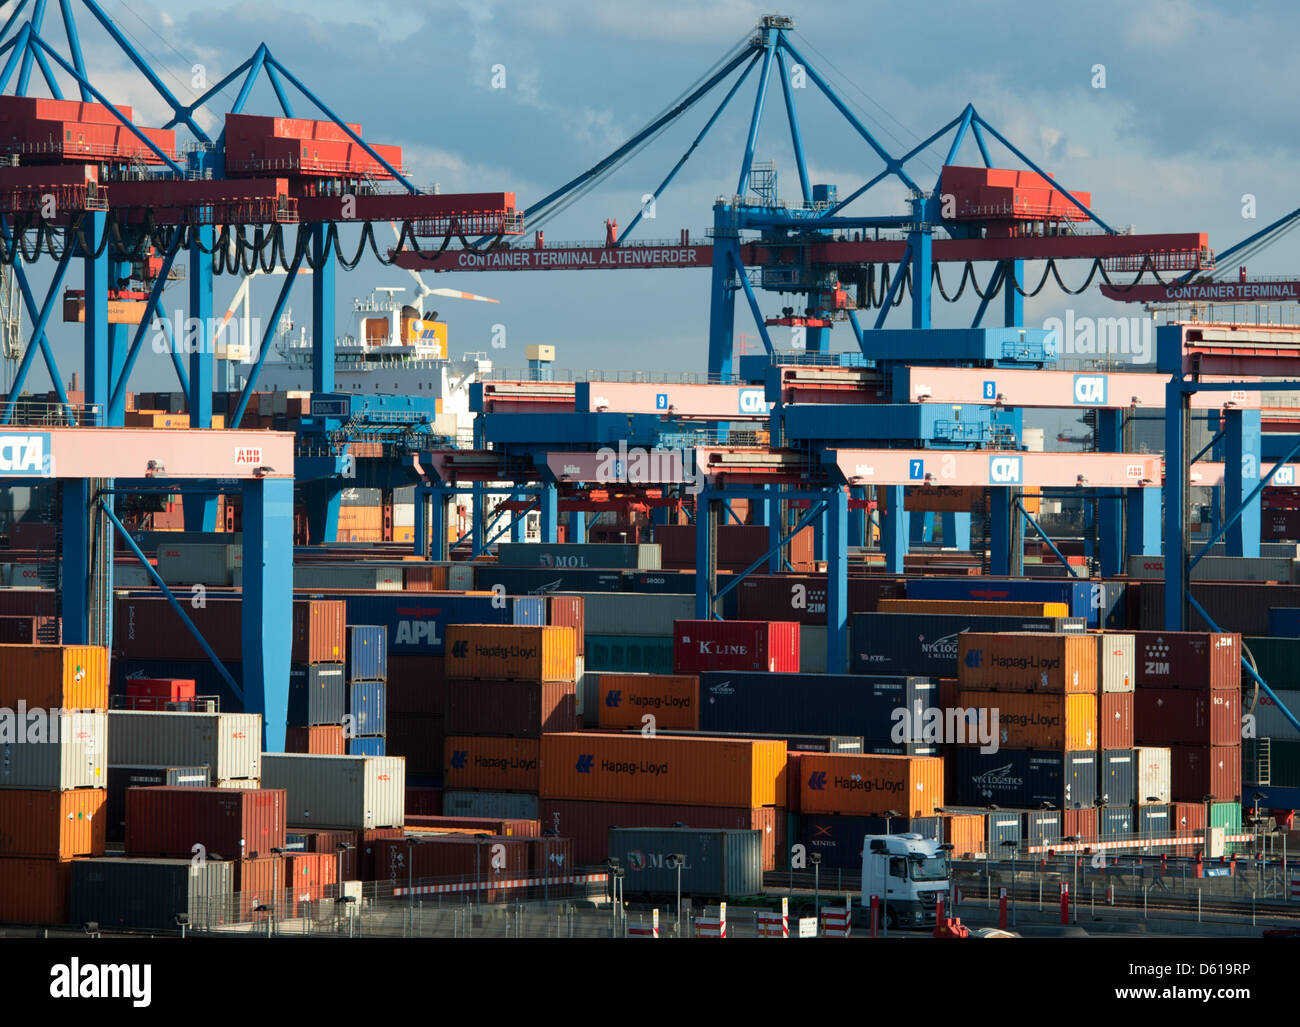 Container terminals. Экодор контейнерный терминал. Hafen Rotterdam контейнерный терминал. Контейнерный терминал Норд Никольское.